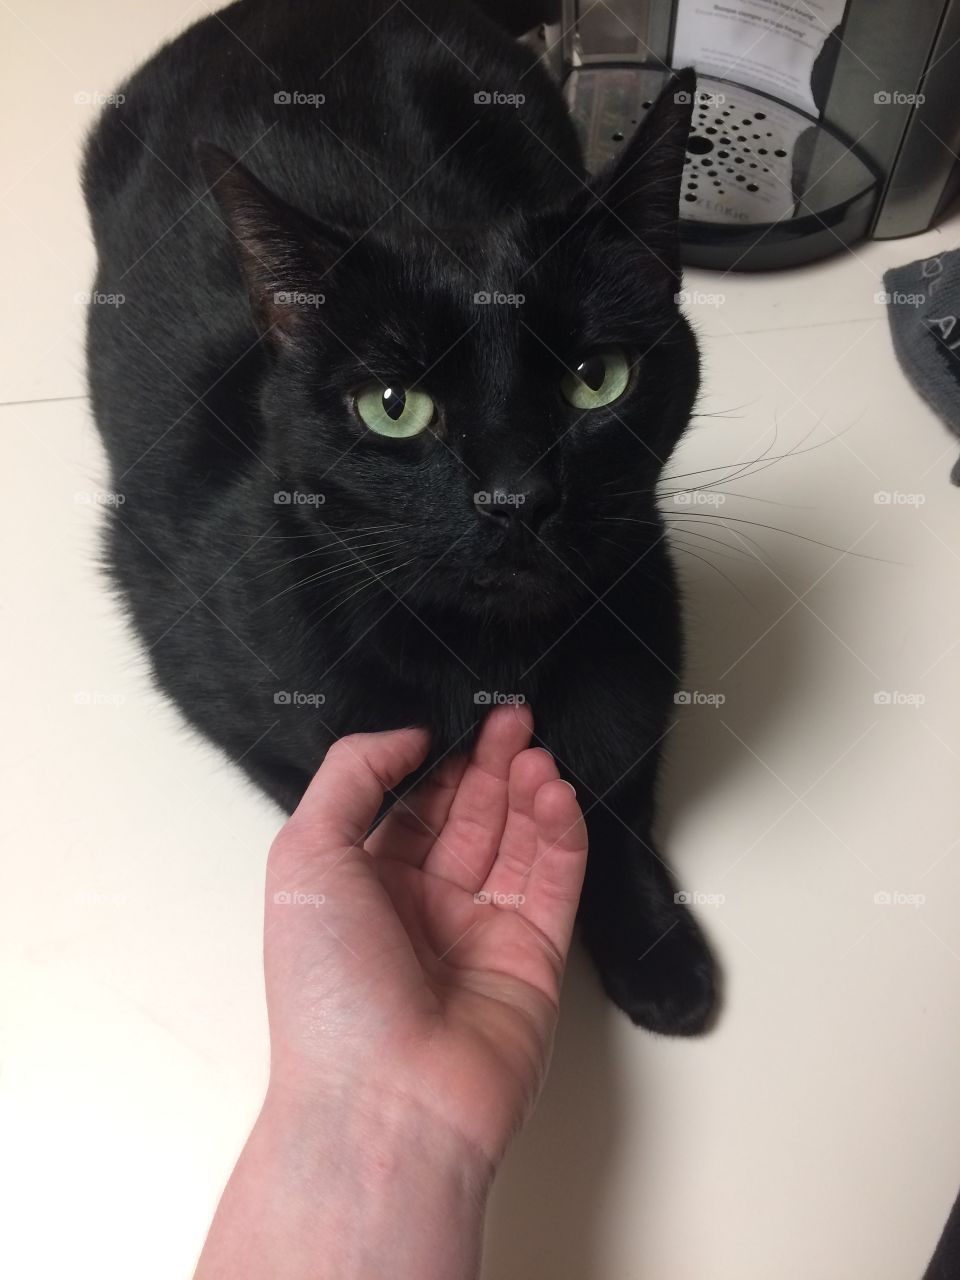 Nothing cuter than a black cat that loves u❤️